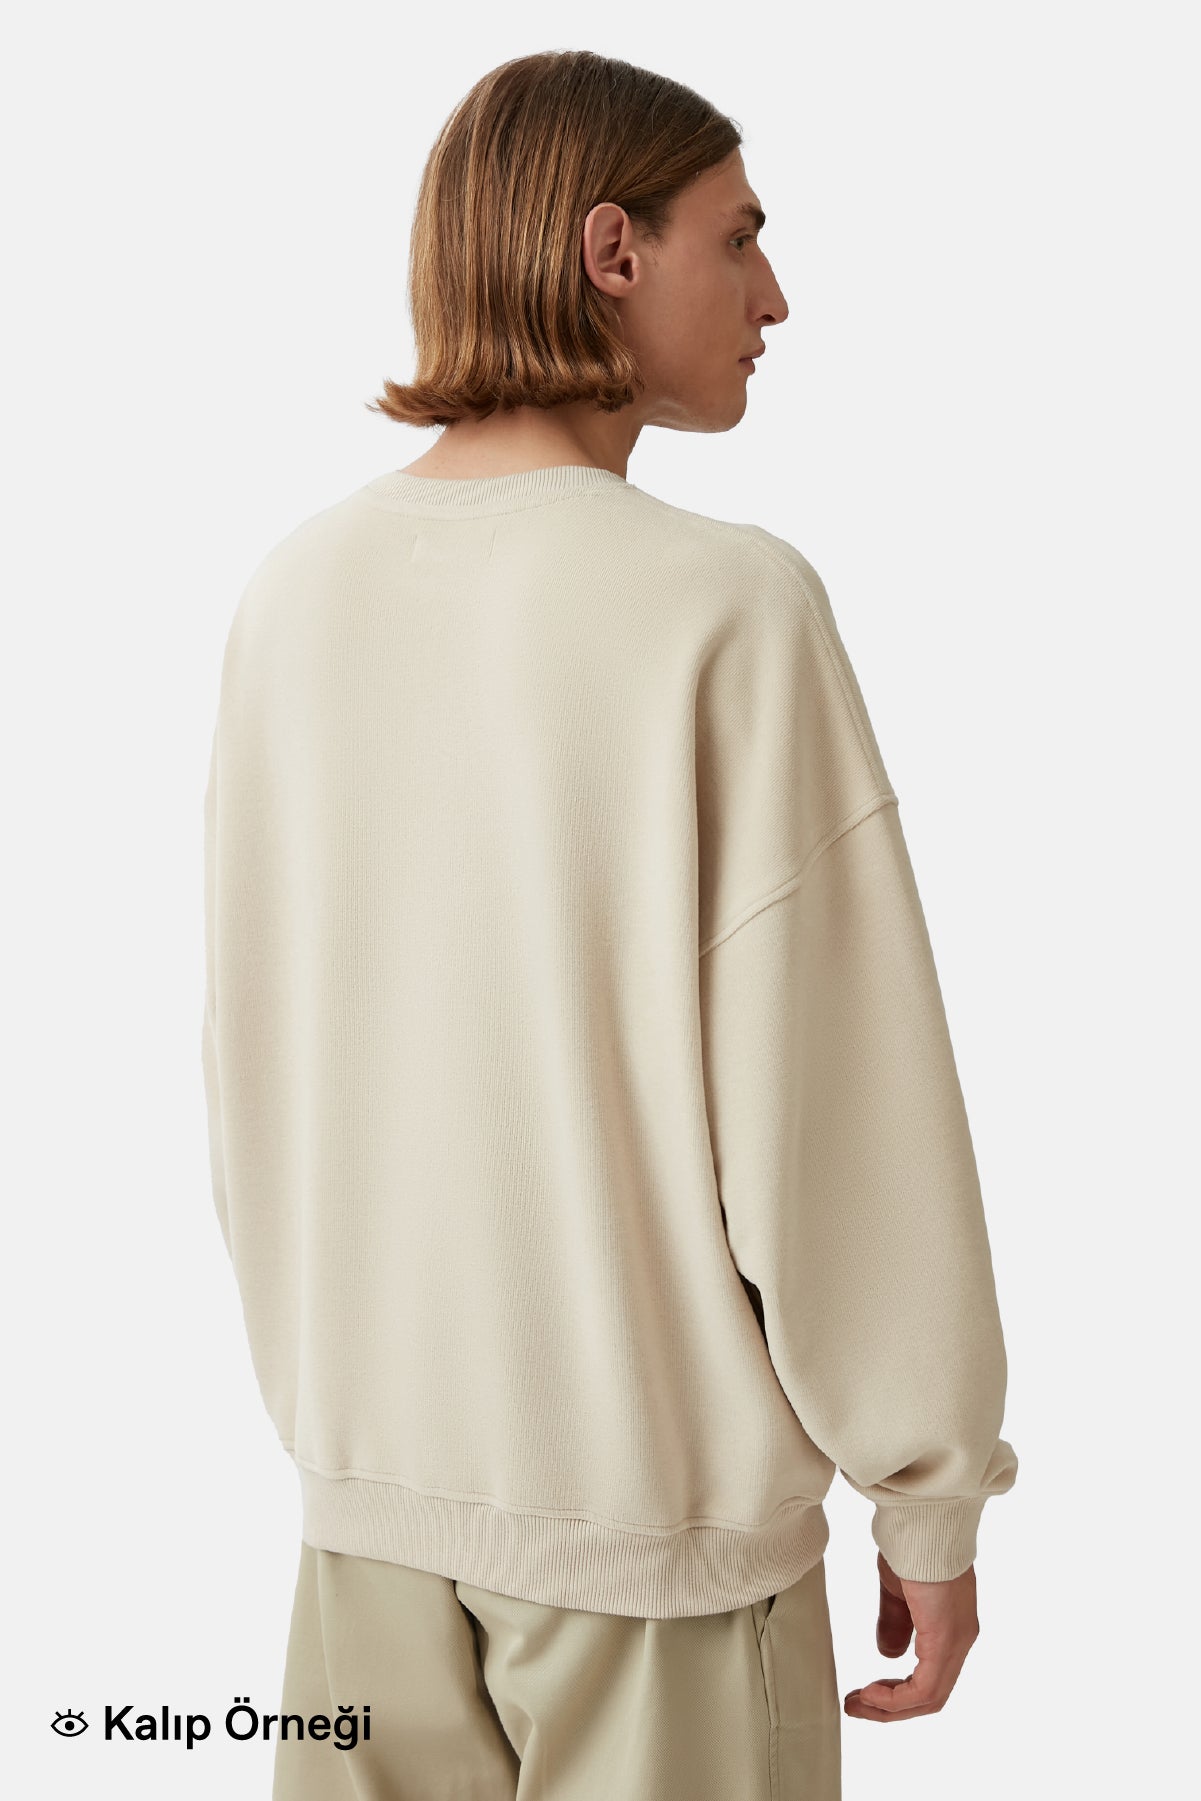 Aslan Super Soft  Sweatshirt - Füme